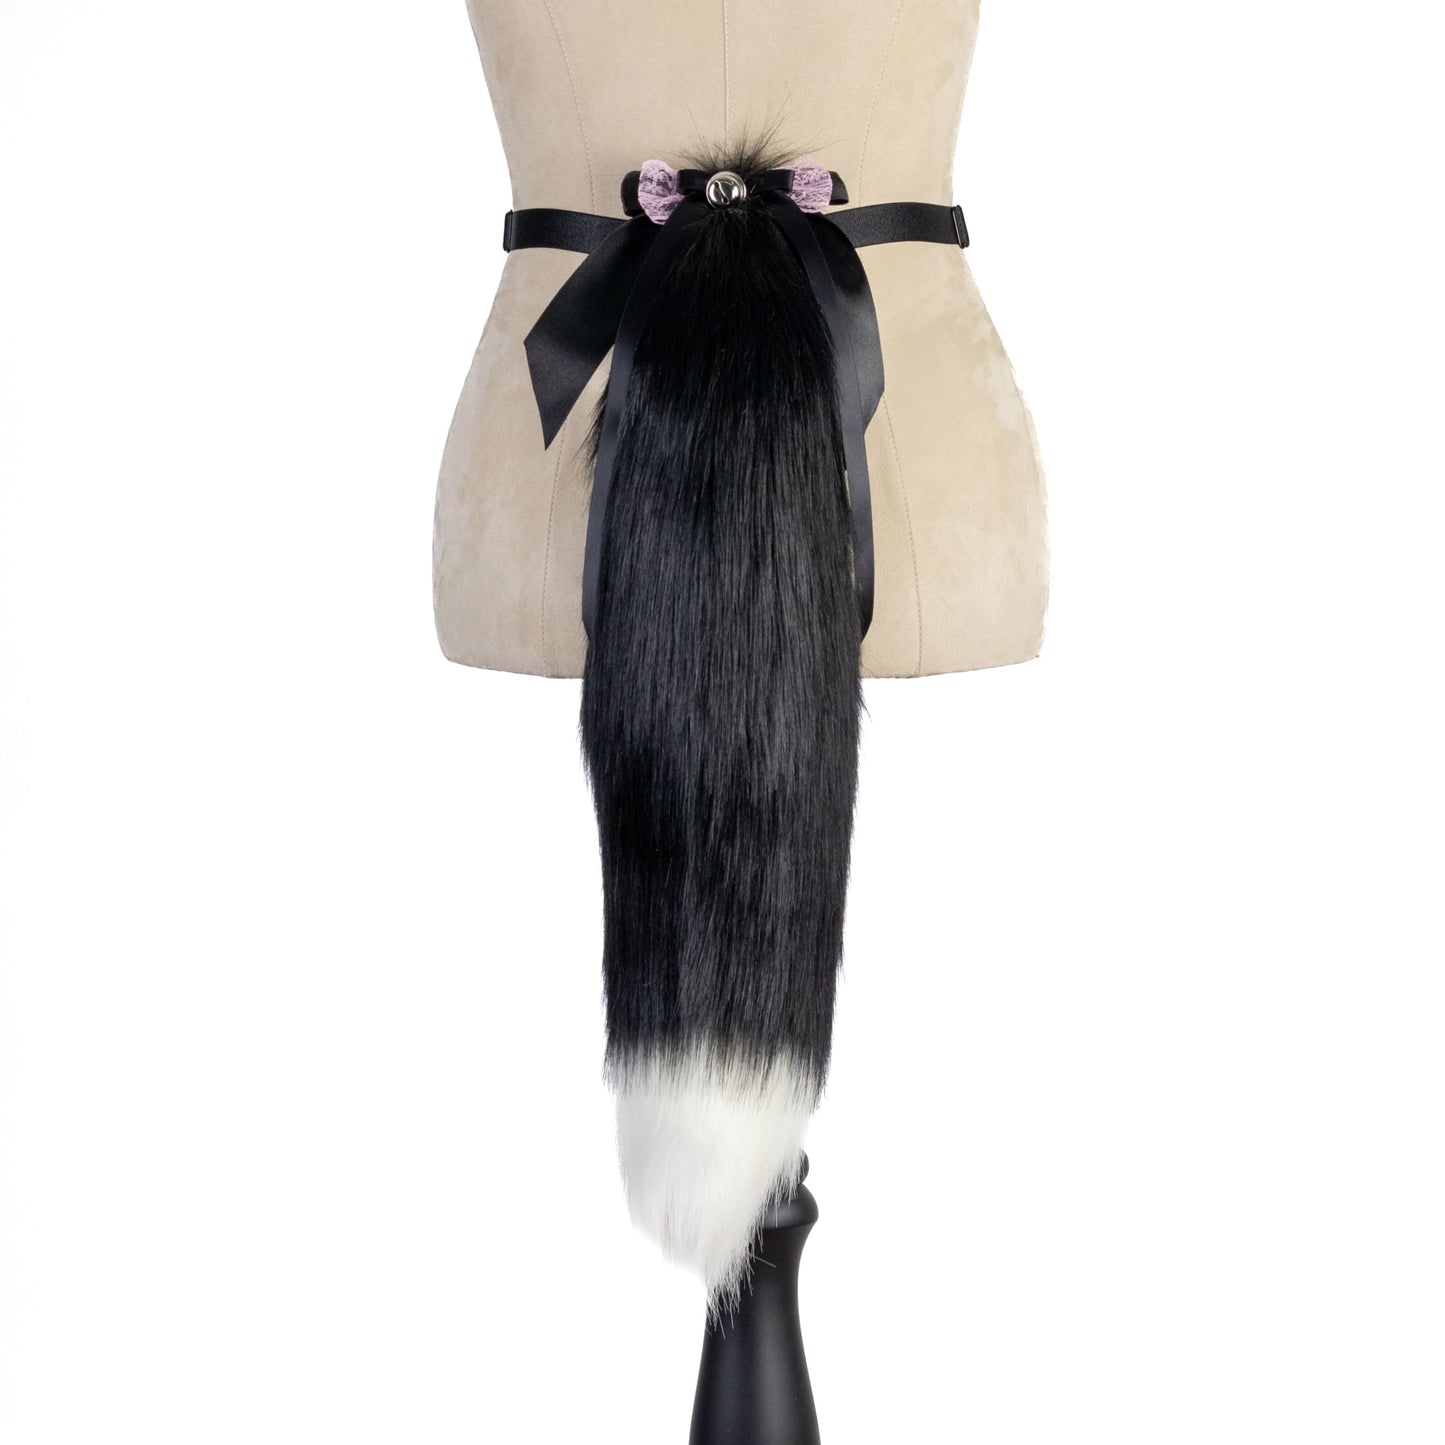 Black Fox Ears and Tail Set